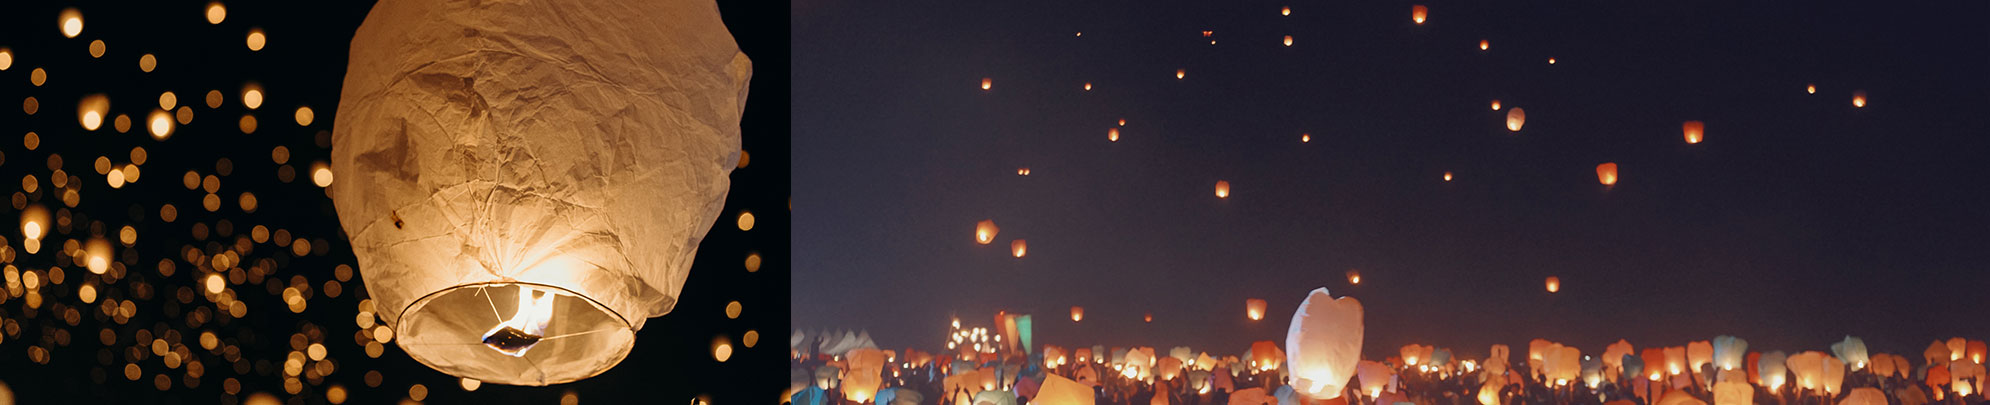 Paper lanterns lit up against a dark night sky